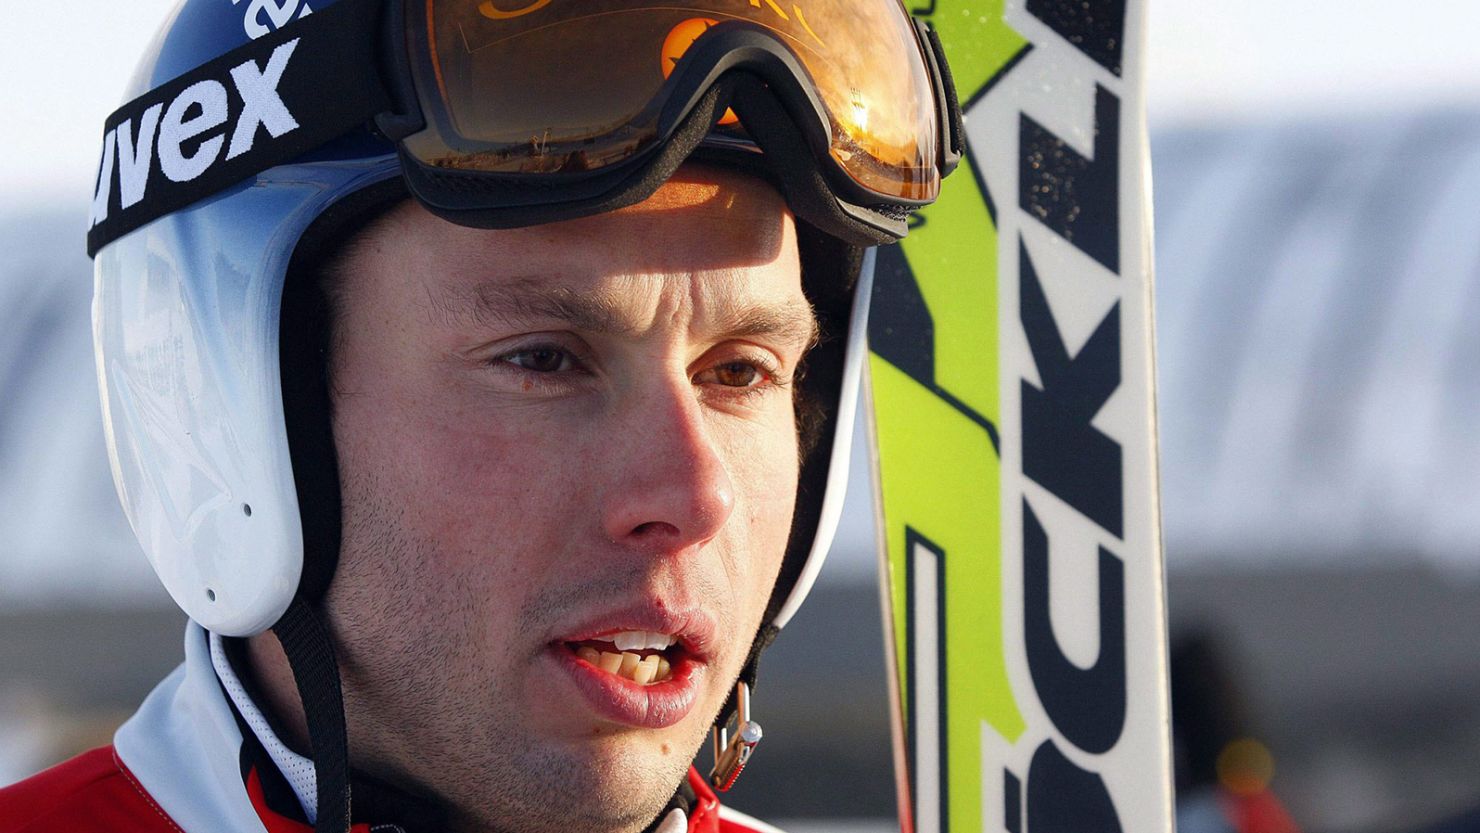 Canadian ski cross team member David Duncan spent Friday night in jail.